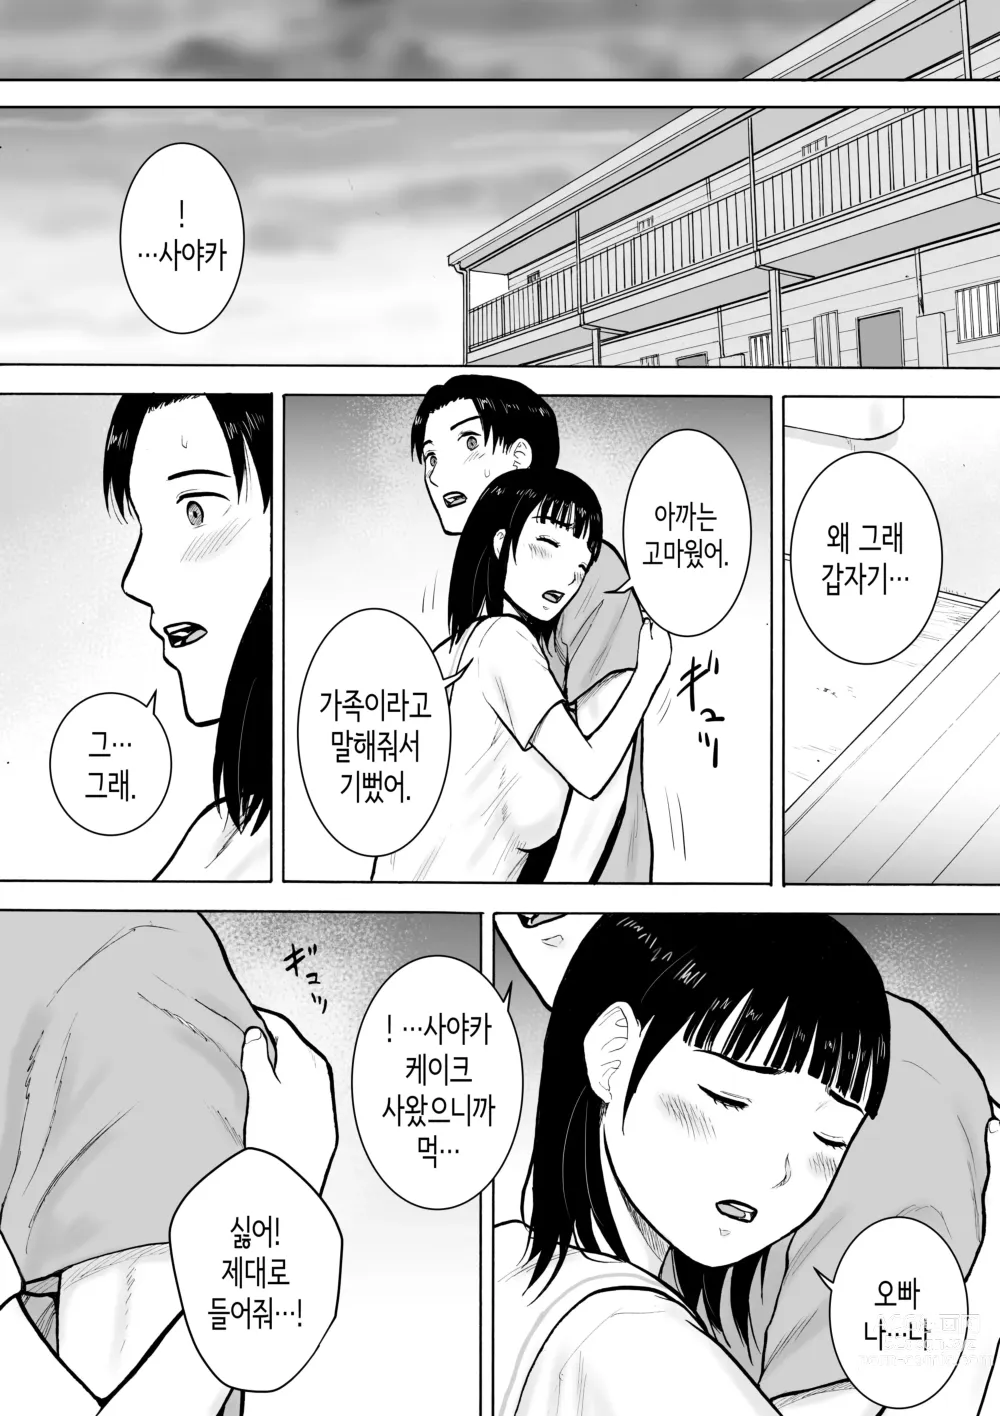 Page 21 of doujinshi “18-Sai”│『18살』